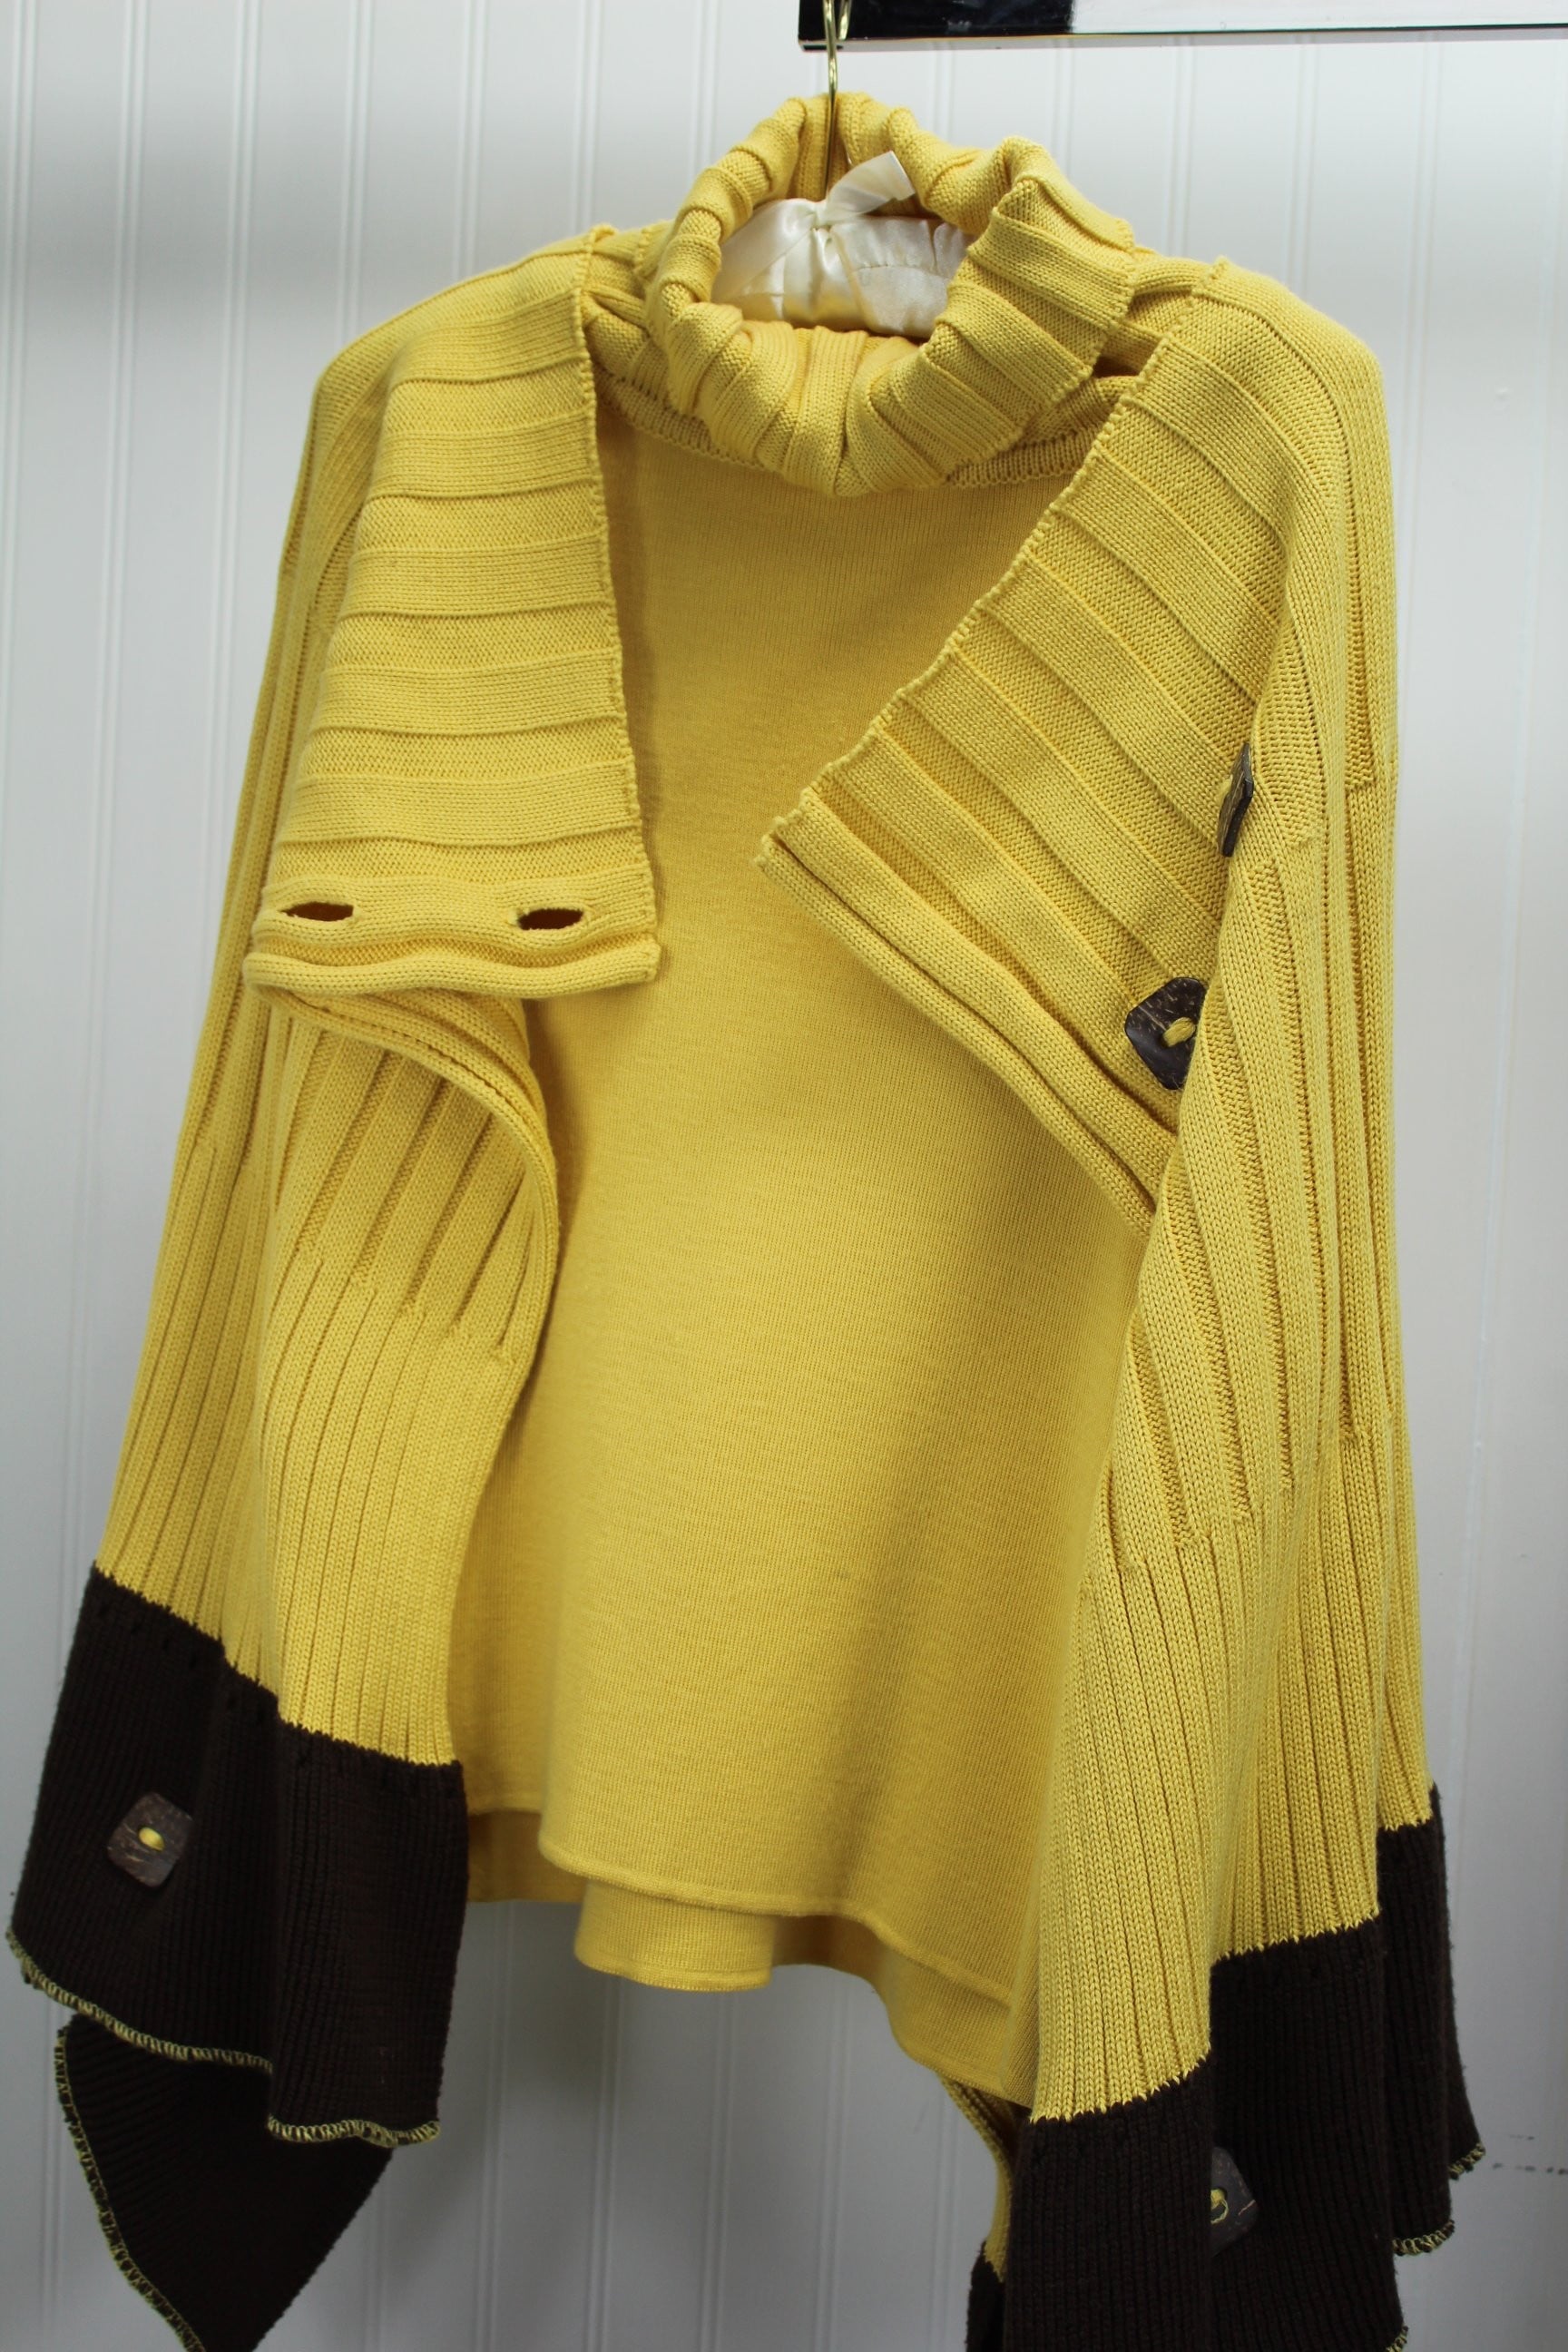 BELAMIE Turtleneck Matching Shawl Yellow Wool Acrylic Fashion nutshell buttons